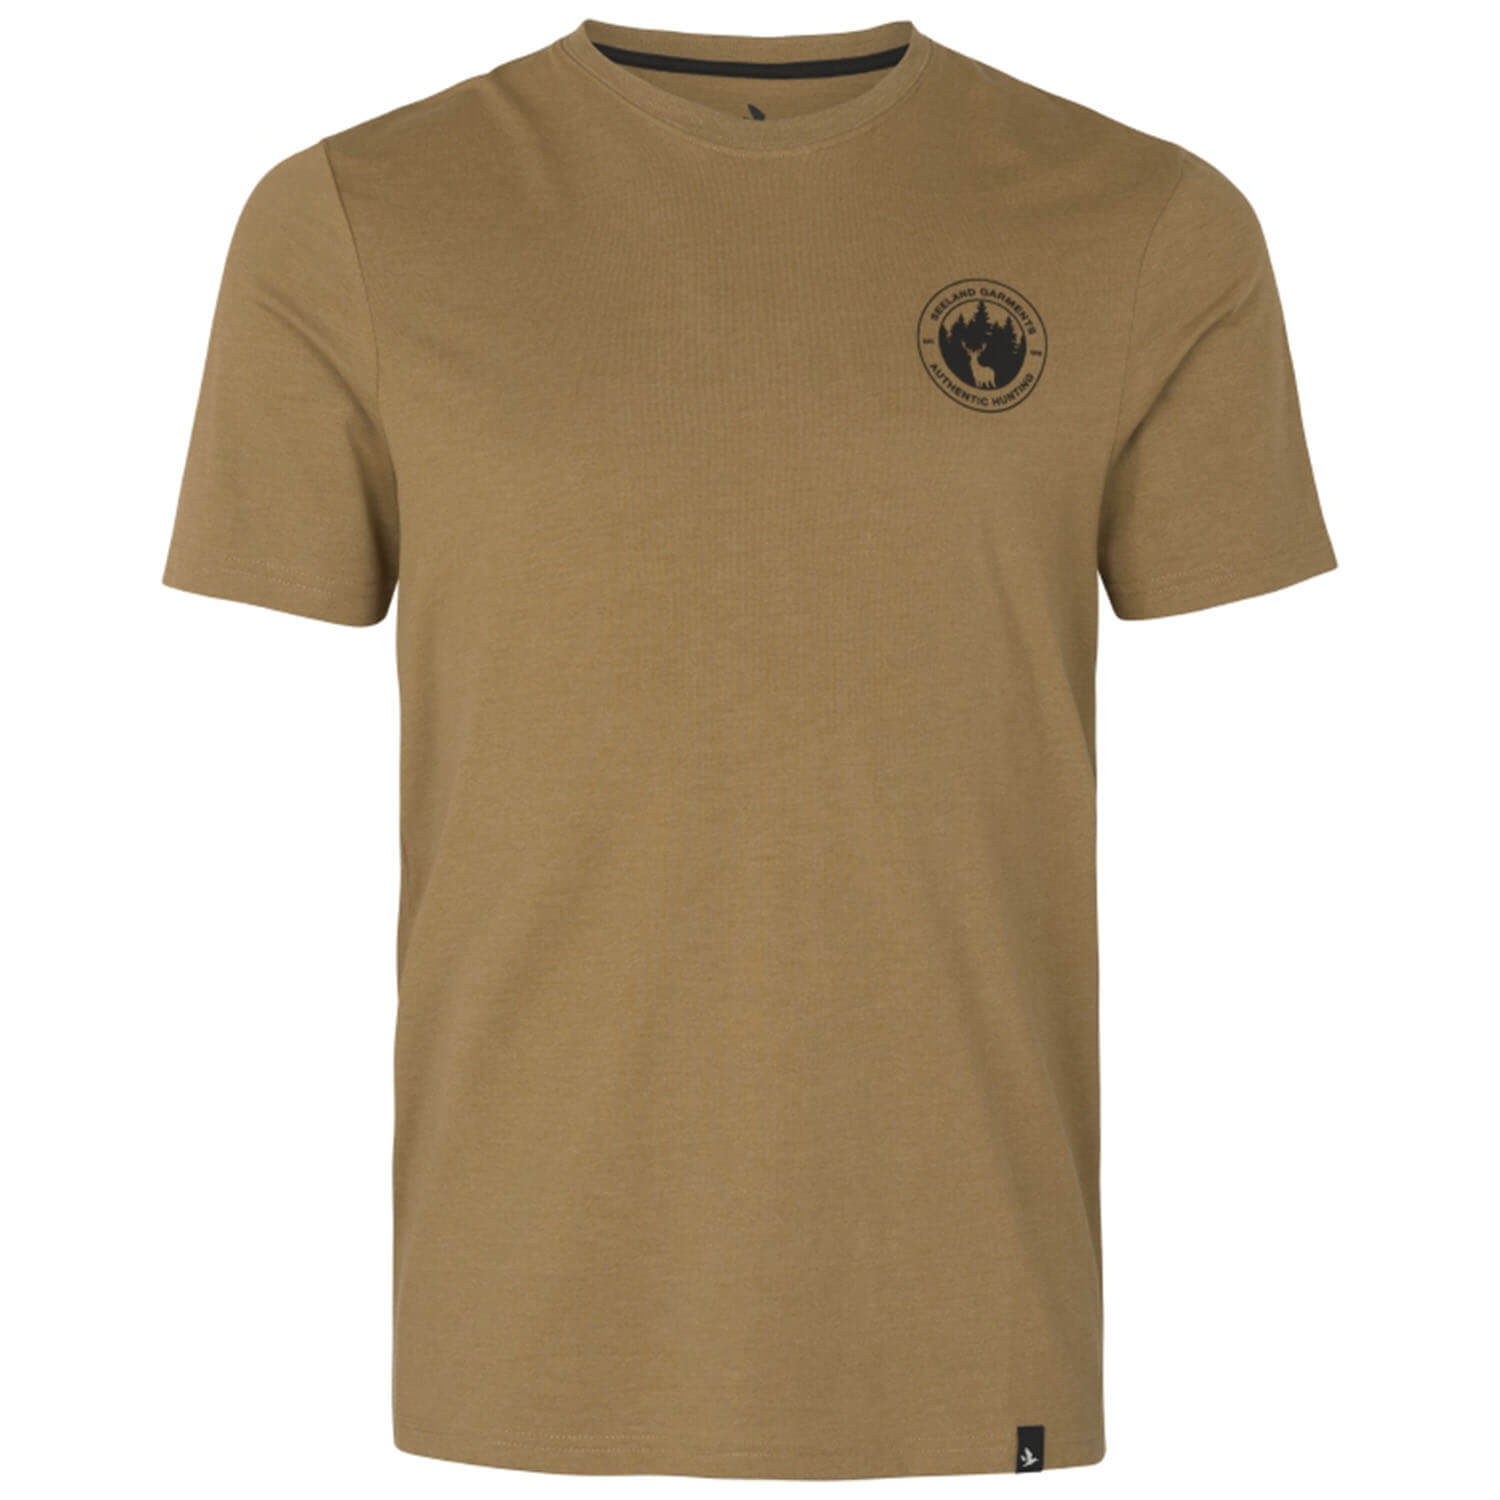  Seeland T-shirt Saker (Antiek Brons gemêleerd) - Jachtshirts